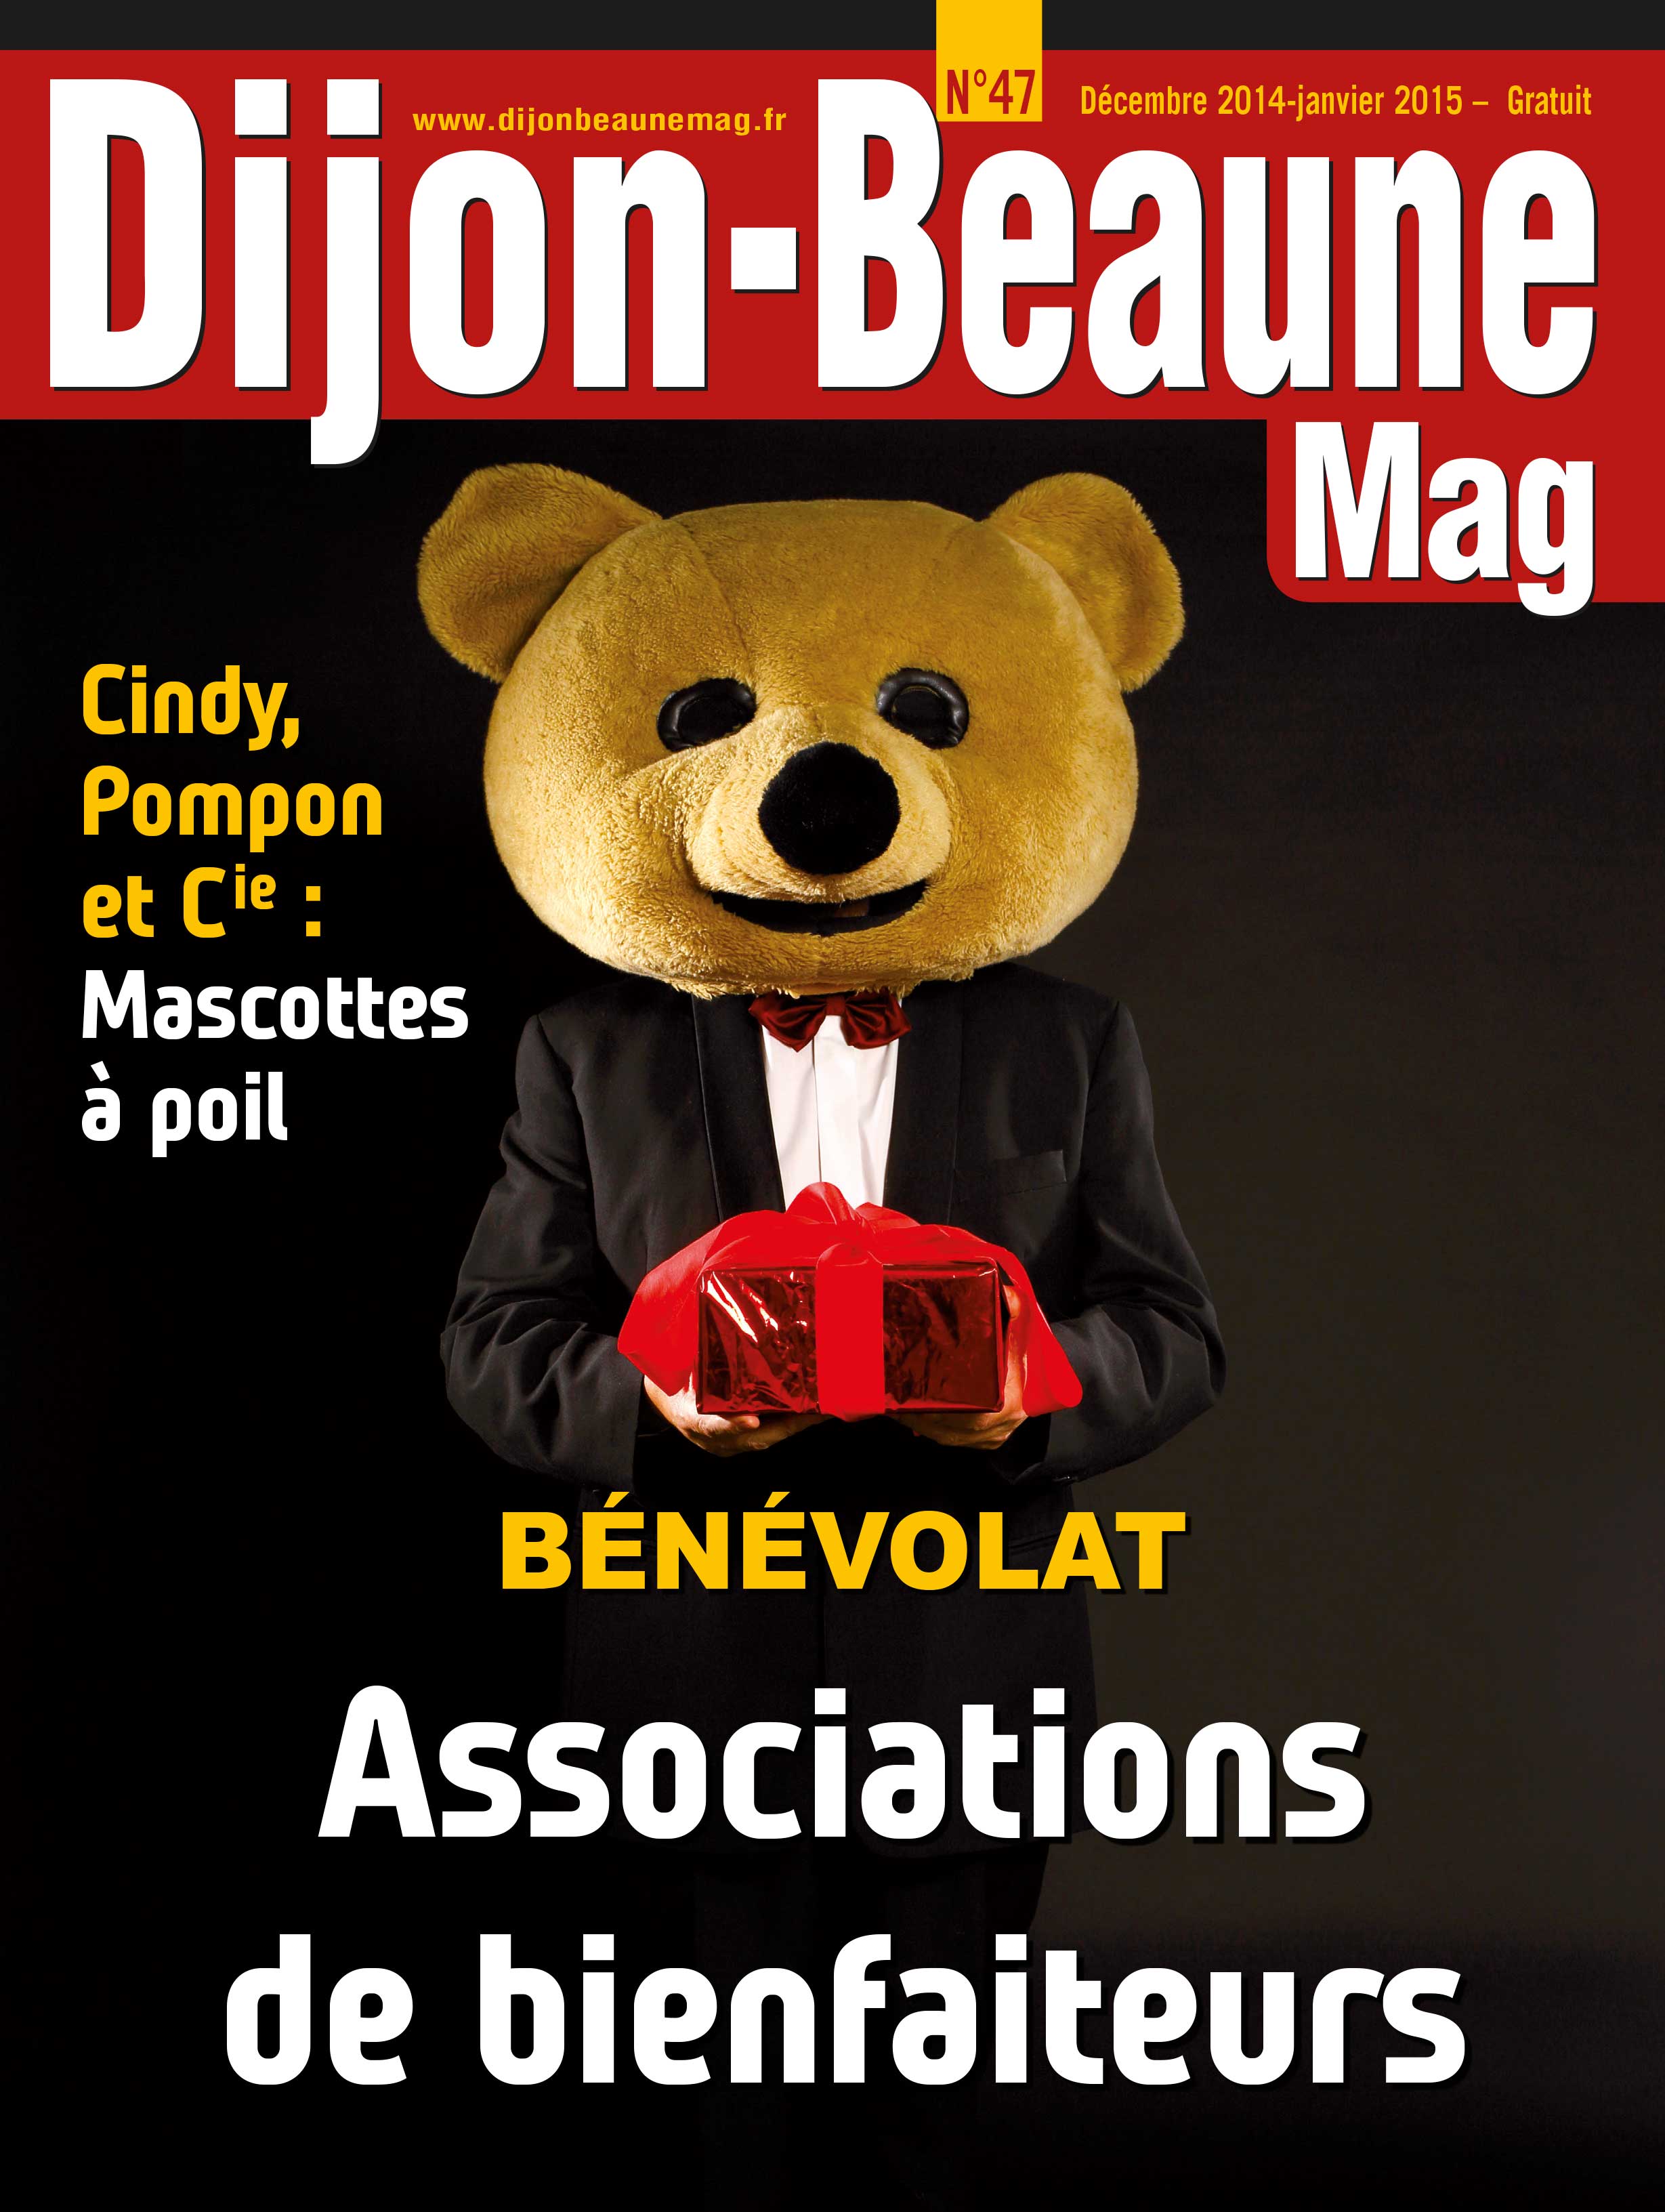 Dijon-Beaune Mag infiltre les associations